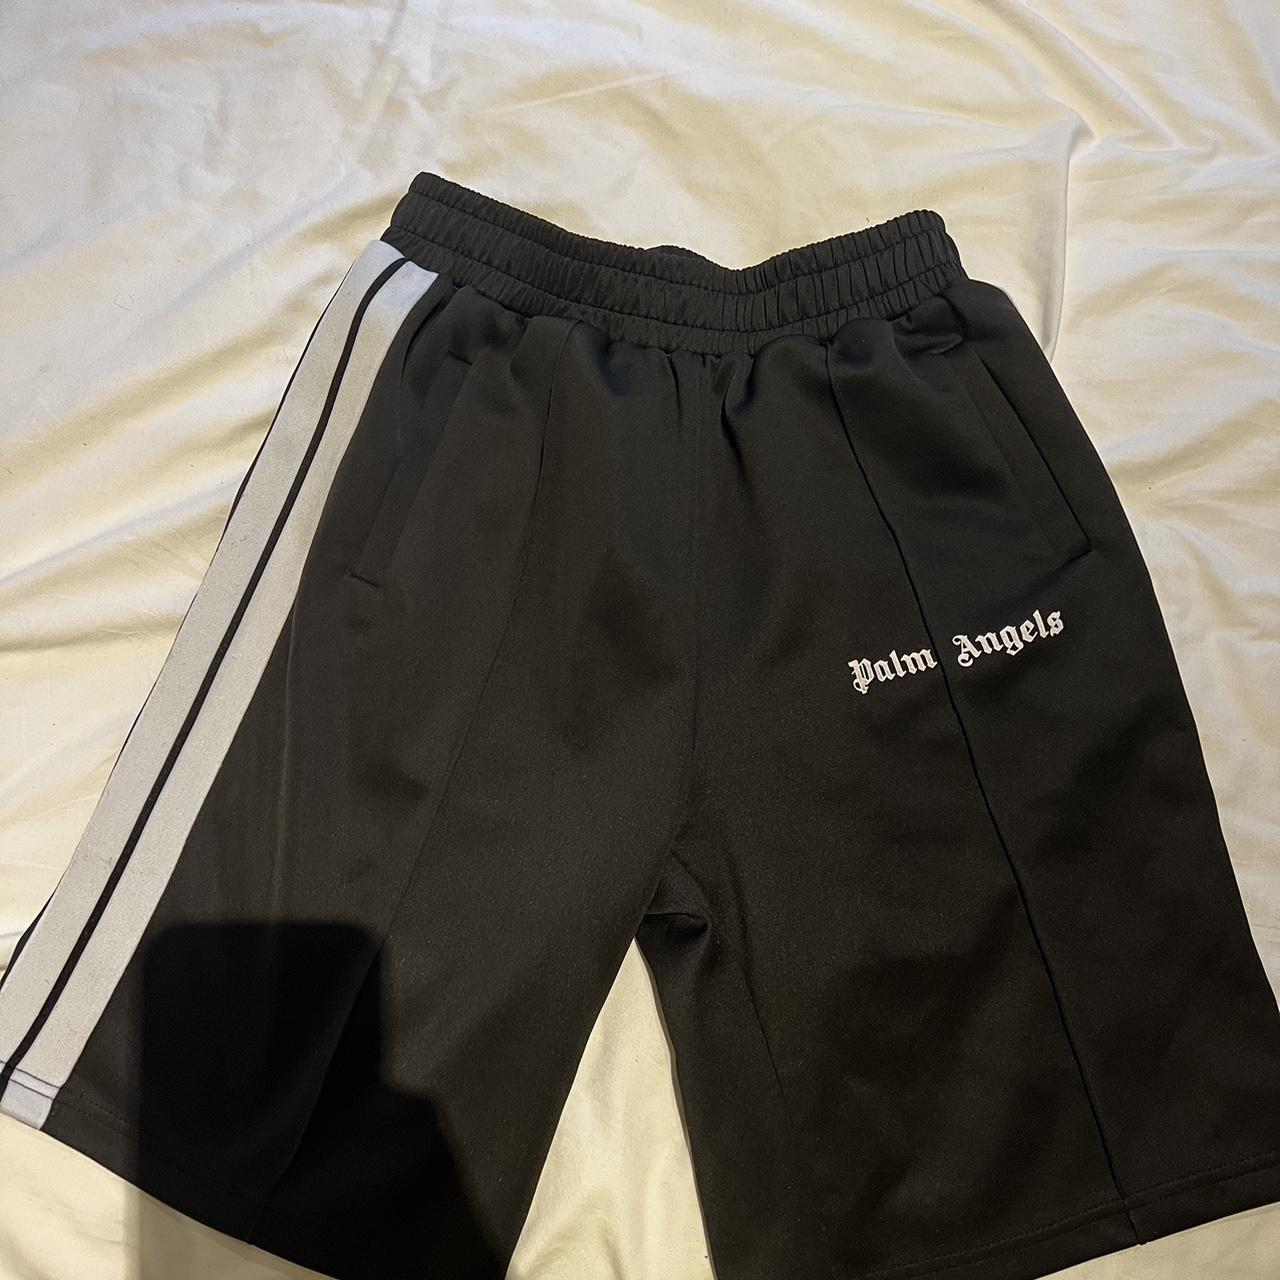 Product Image 1 - Palm Angels Black Shorts

Size M